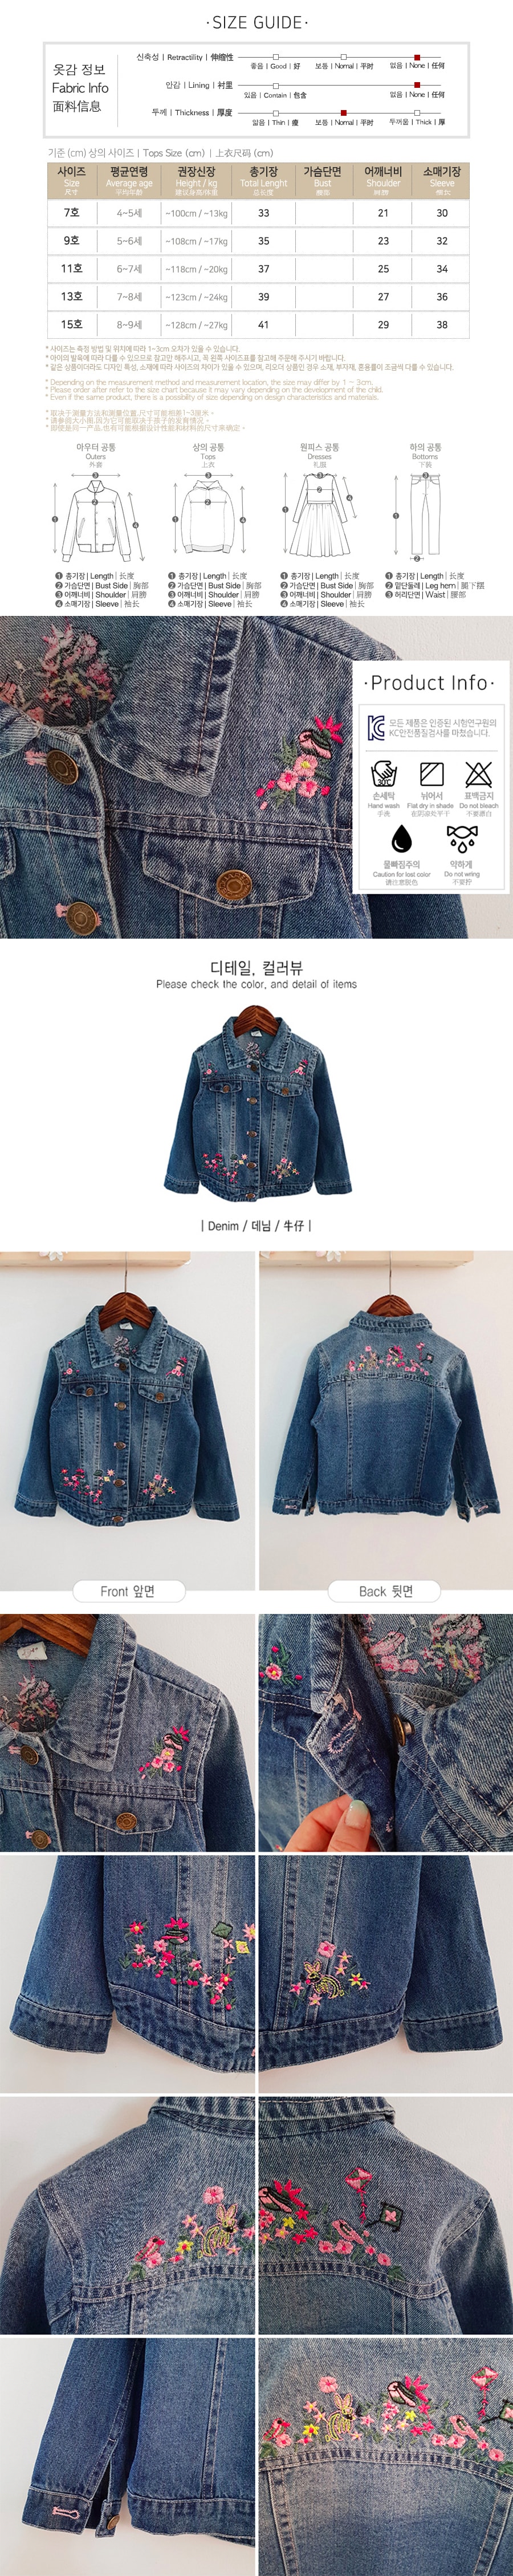 Kid Girl Floral Embroidered Denim Jacket #Denim 11(6-7years)